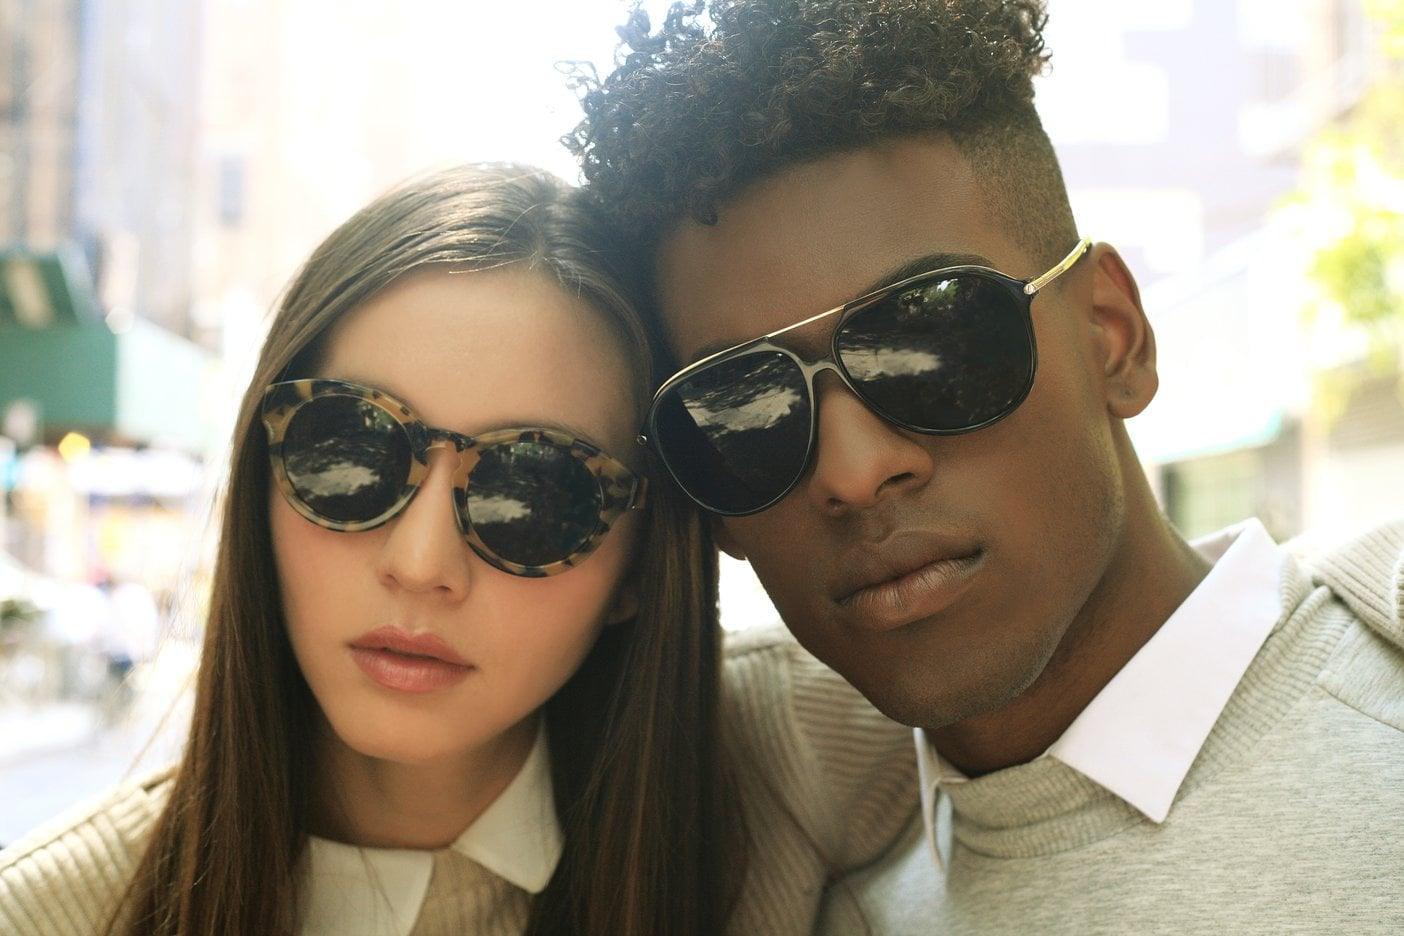 Thick Square Frame Sunglasses for Men Women Black Big Chunky Rectangle